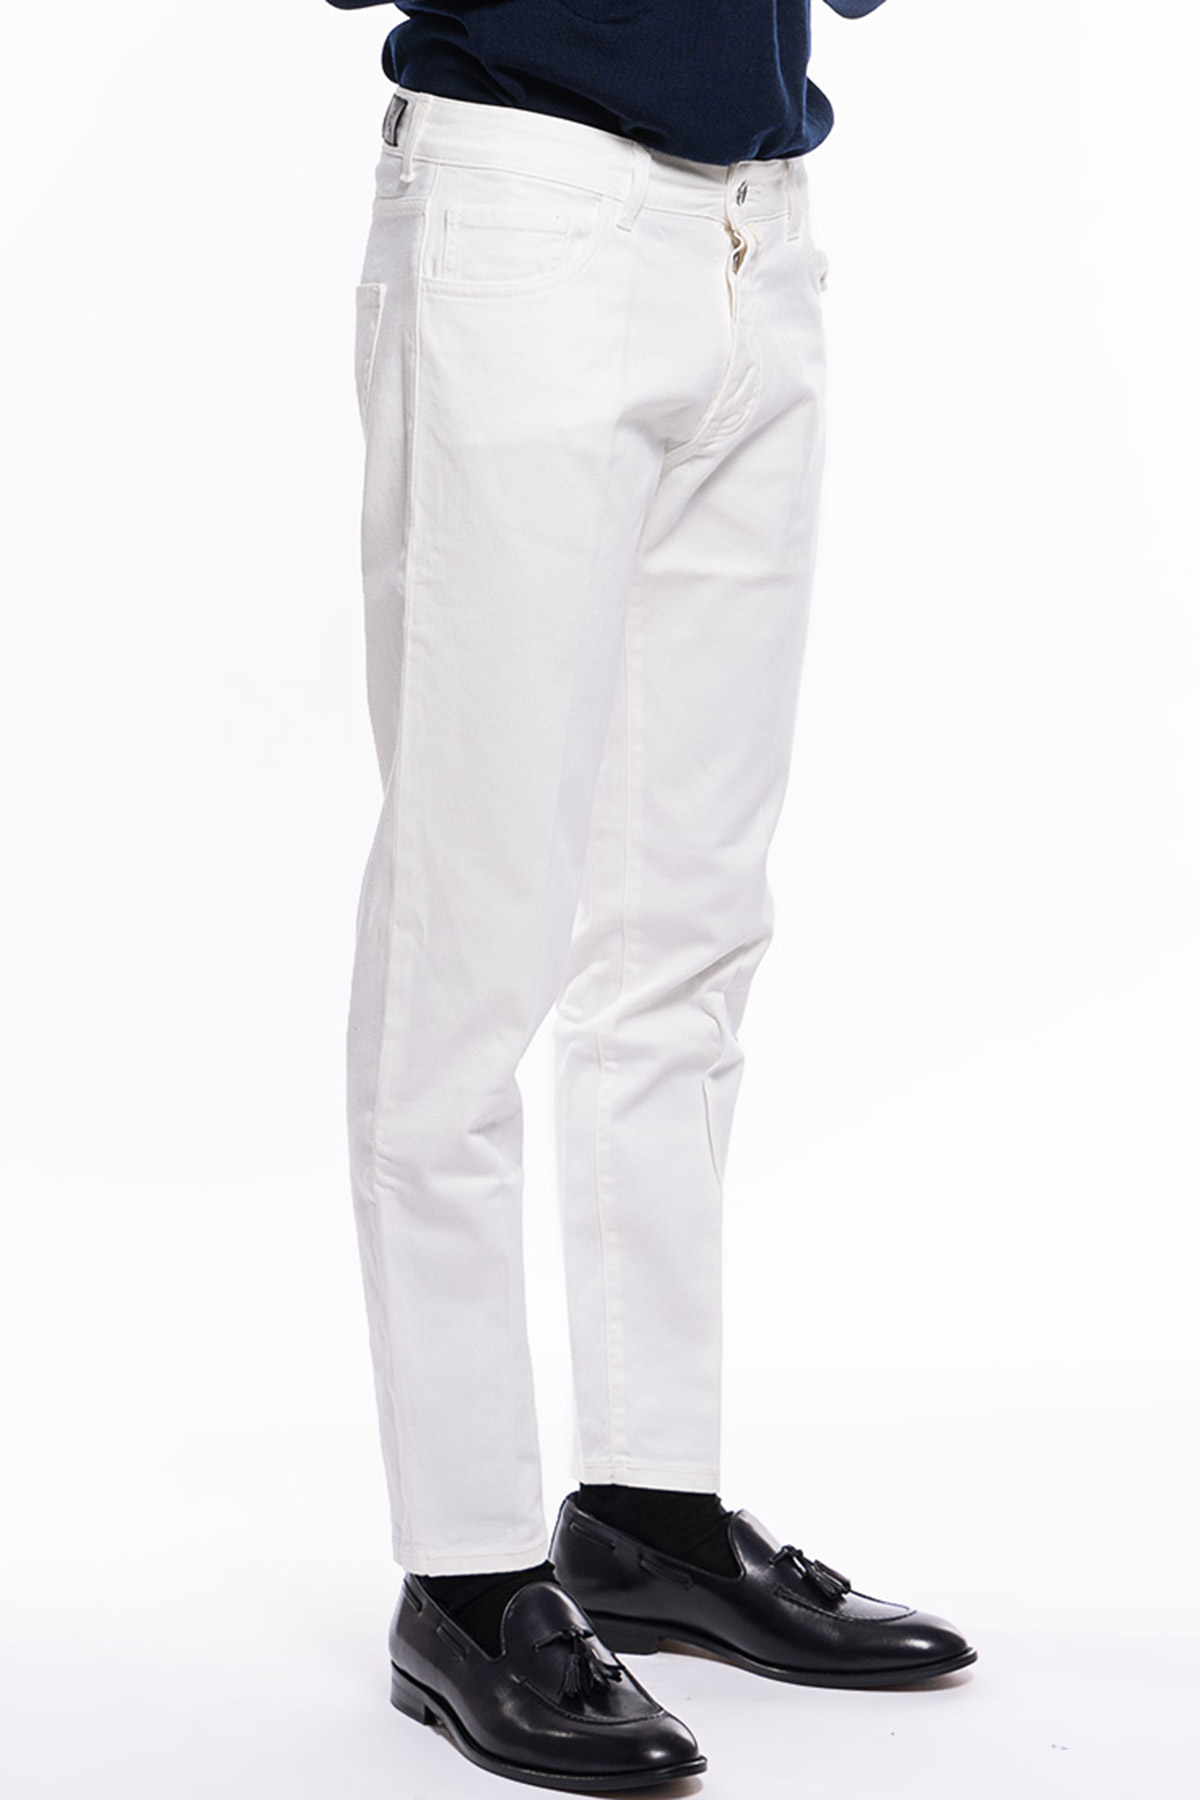 Jeans uomo bianco tinta unita modello 5 tasche slim fit made in italy